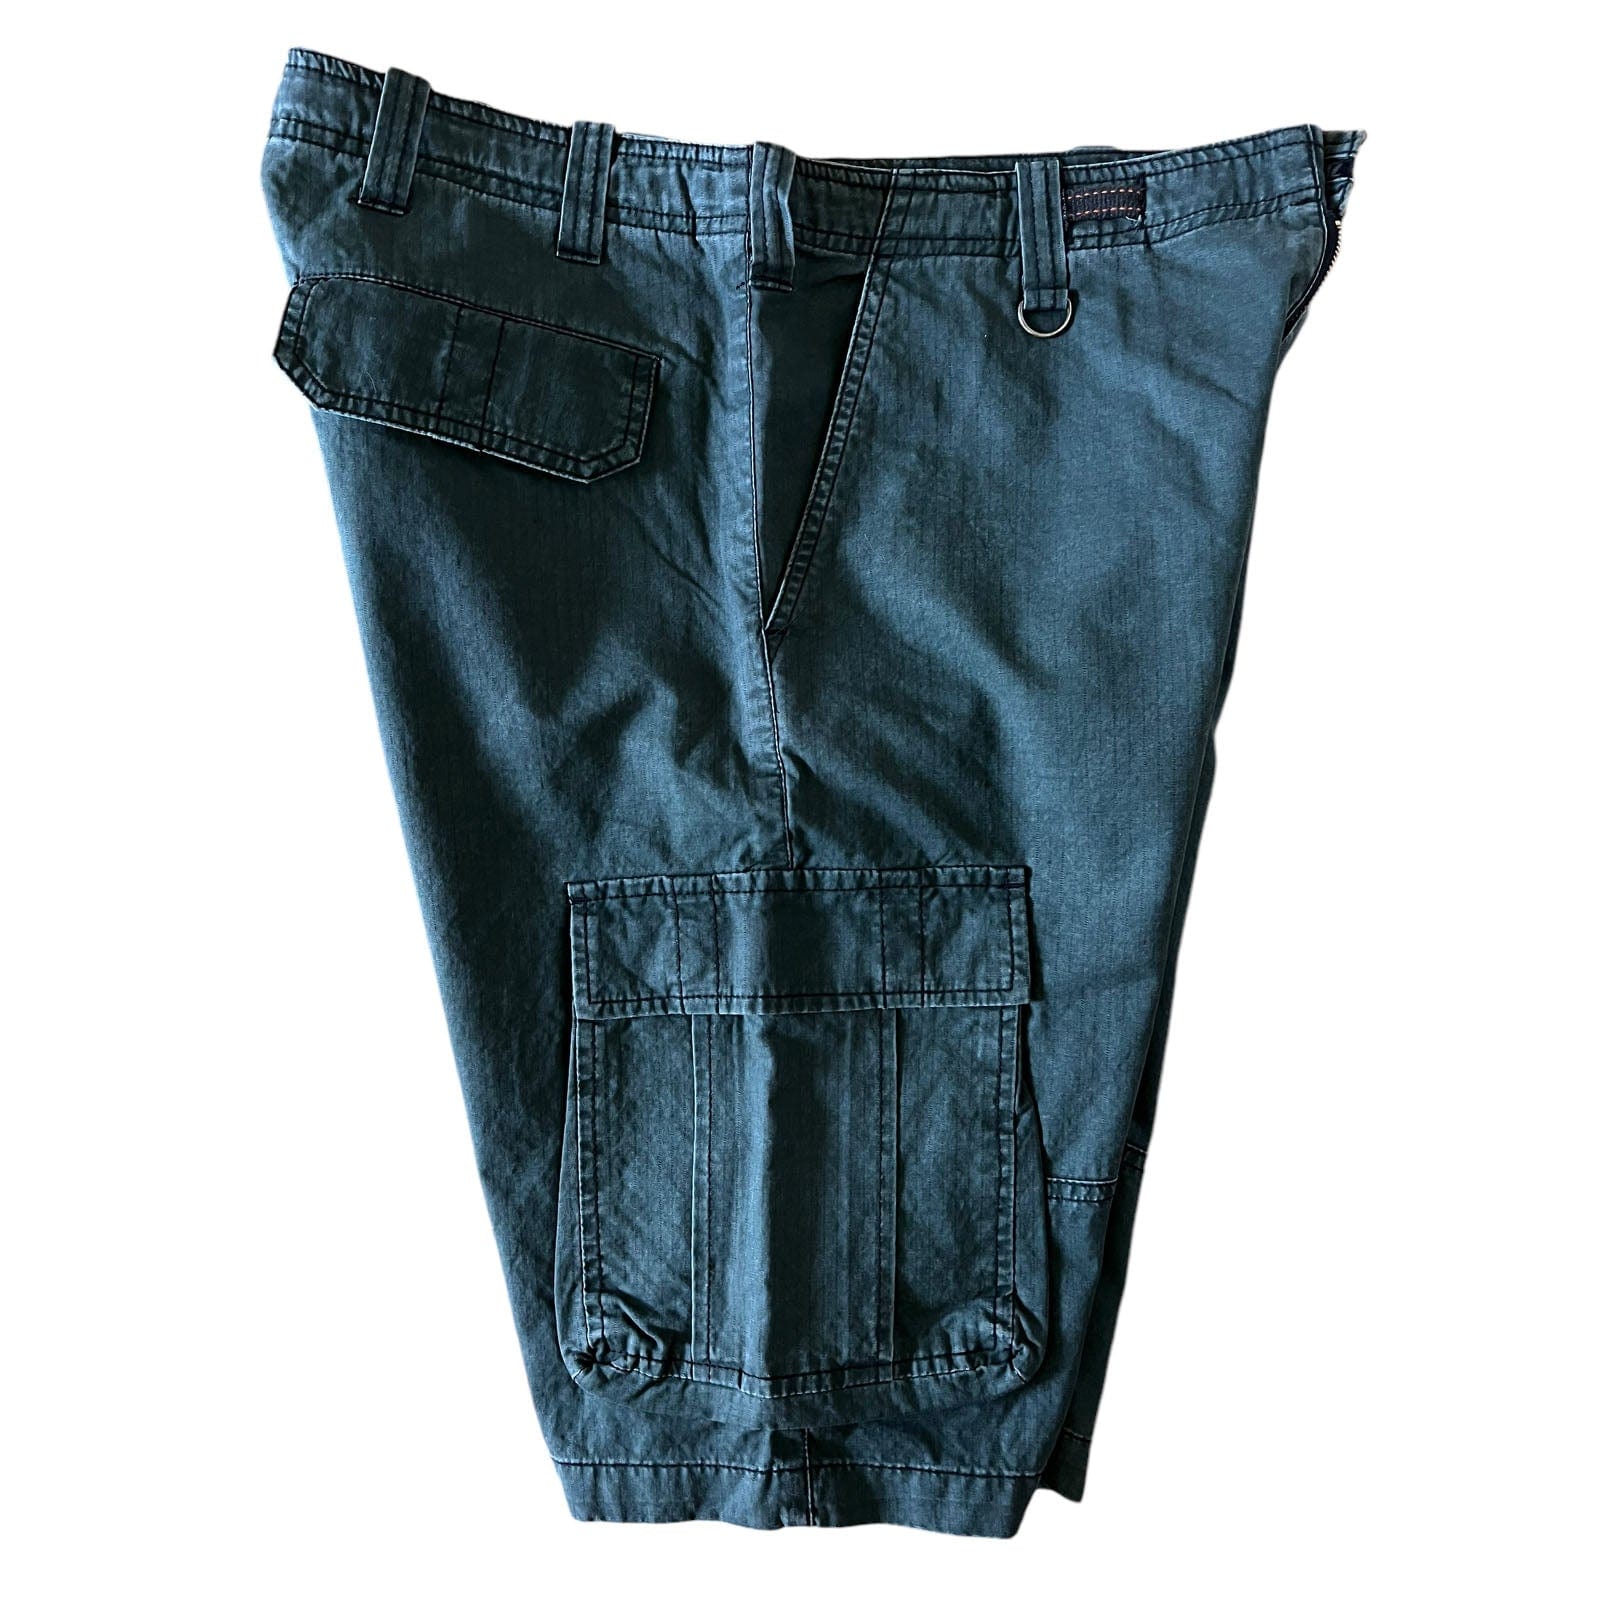 SKIDZ Shorts Canvas Cargo Shorts - Gunmetal Blue